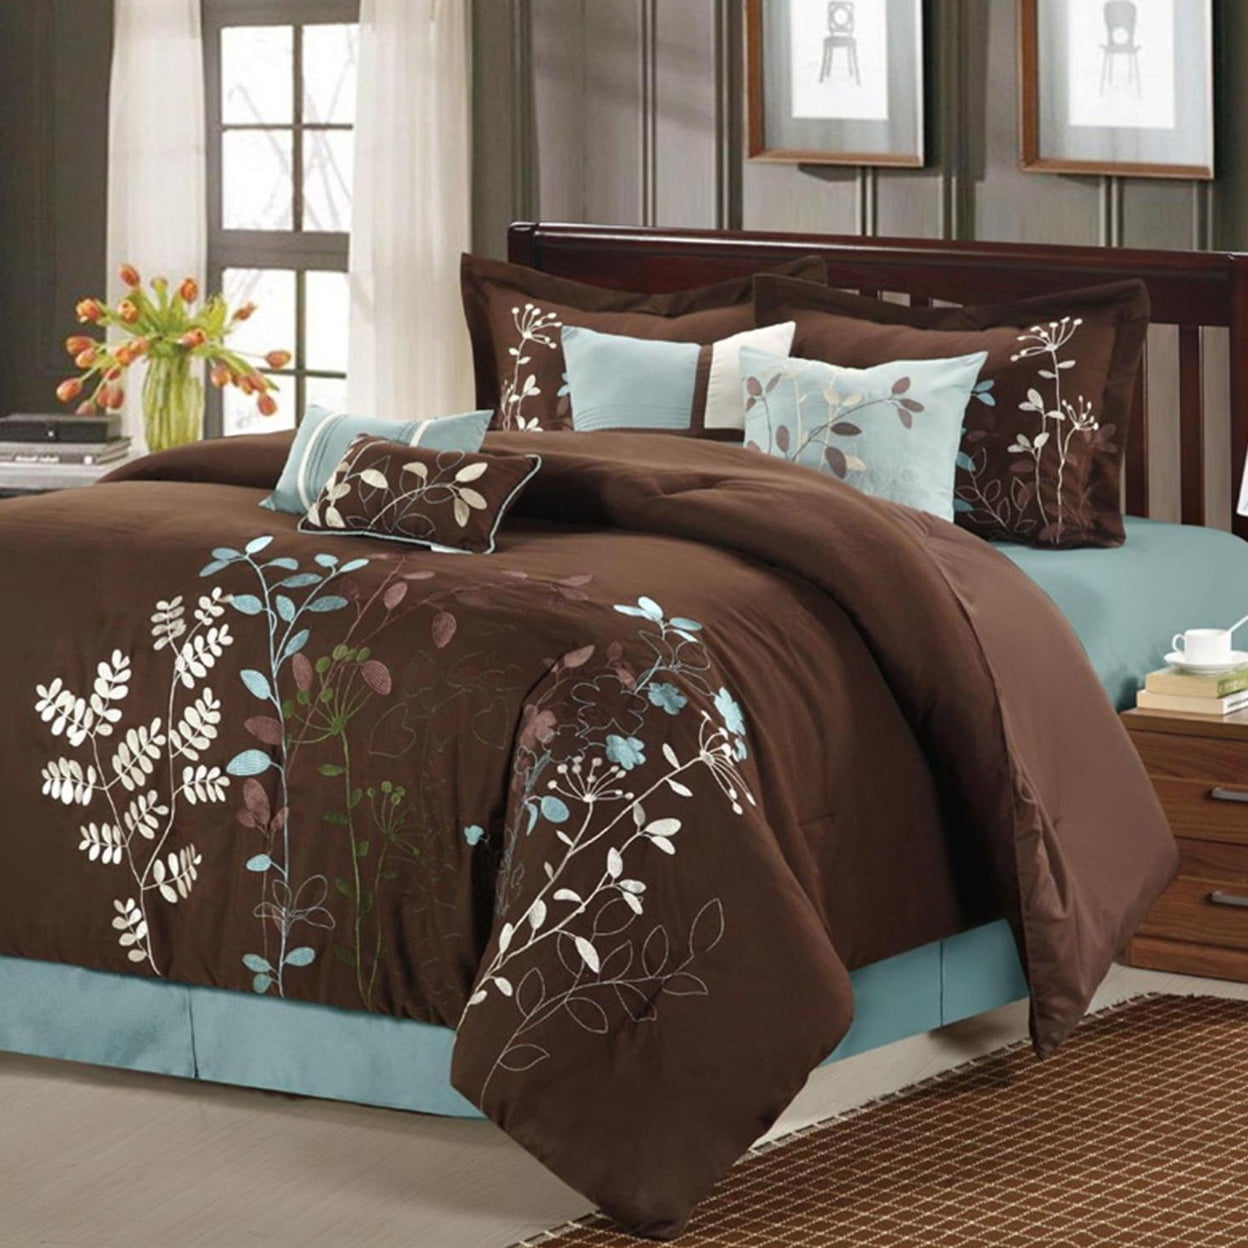 Bliss Garden Embroidered Comforter Set - Brown - King - 8 Piece